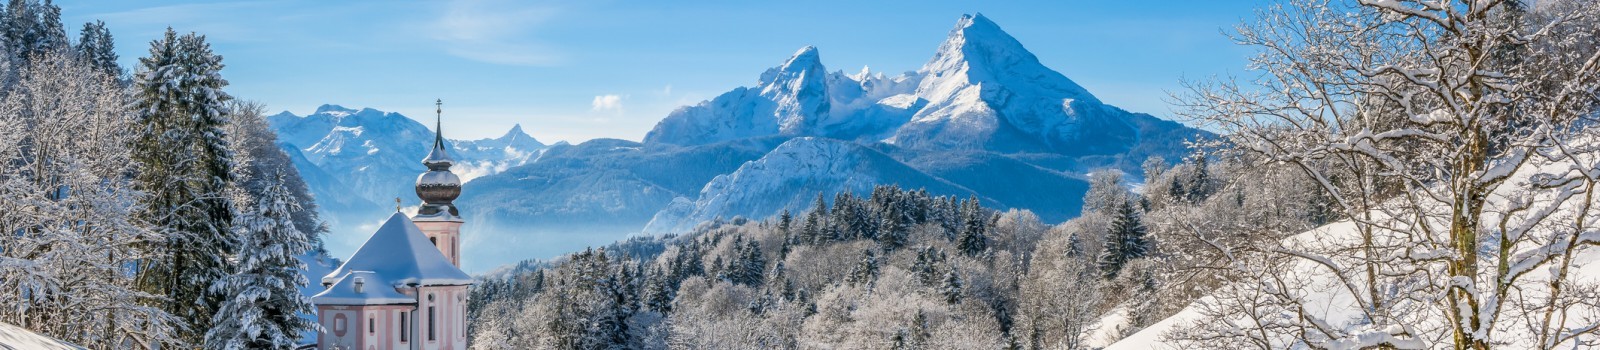  Winterurlaub Berchtesgaden